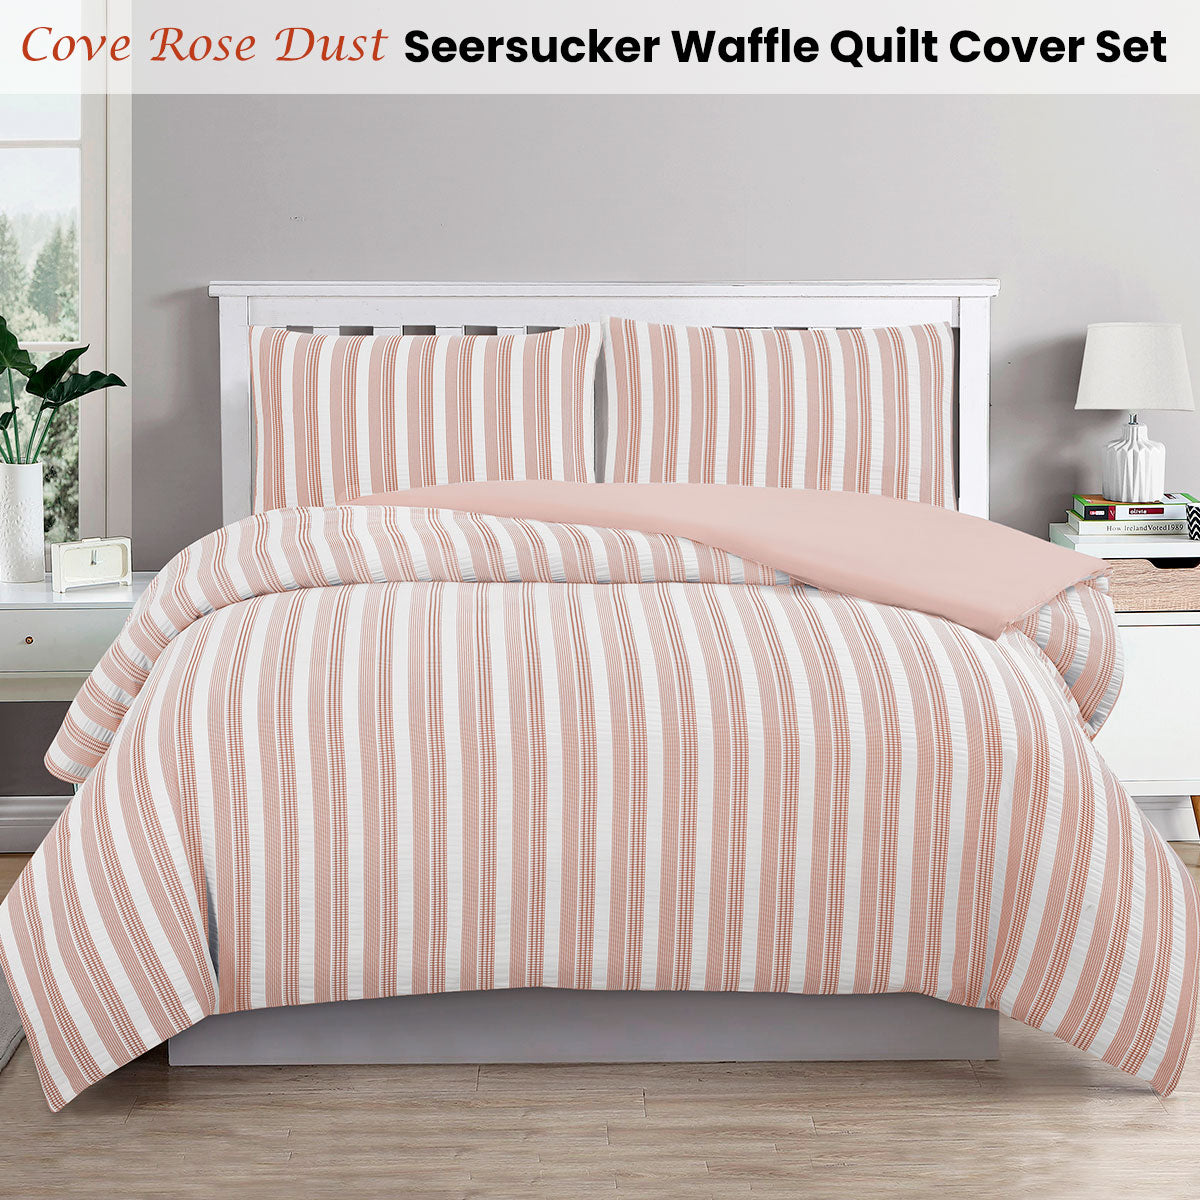 DOUBLE Seersucker Waffle Quilt Cover Set - Peach